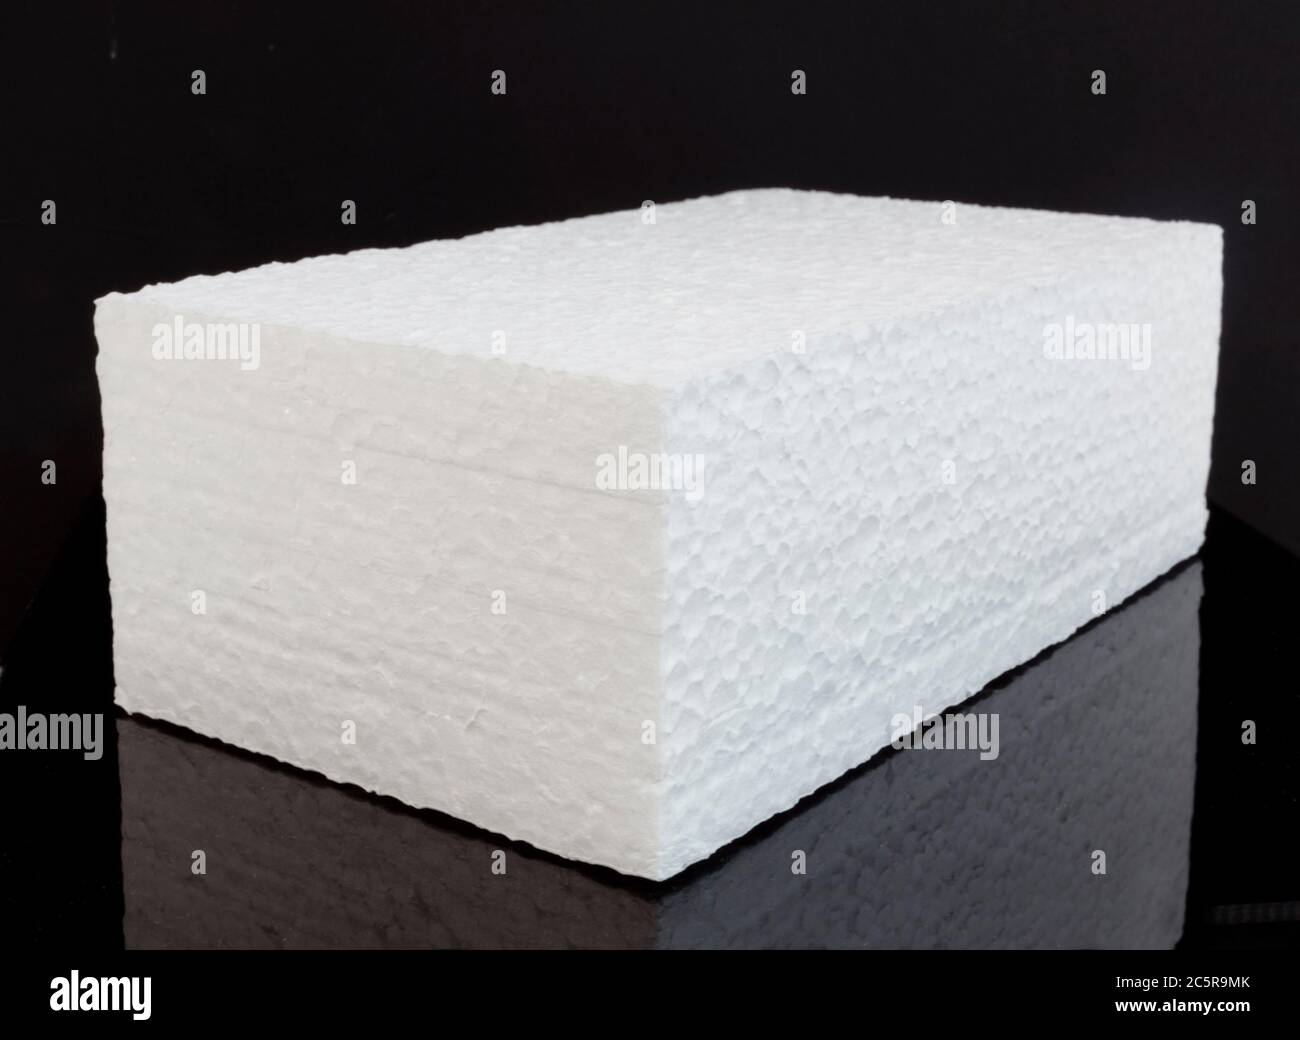 Single brick block of white styrofoam on black background. Horizontal. Stock Photo